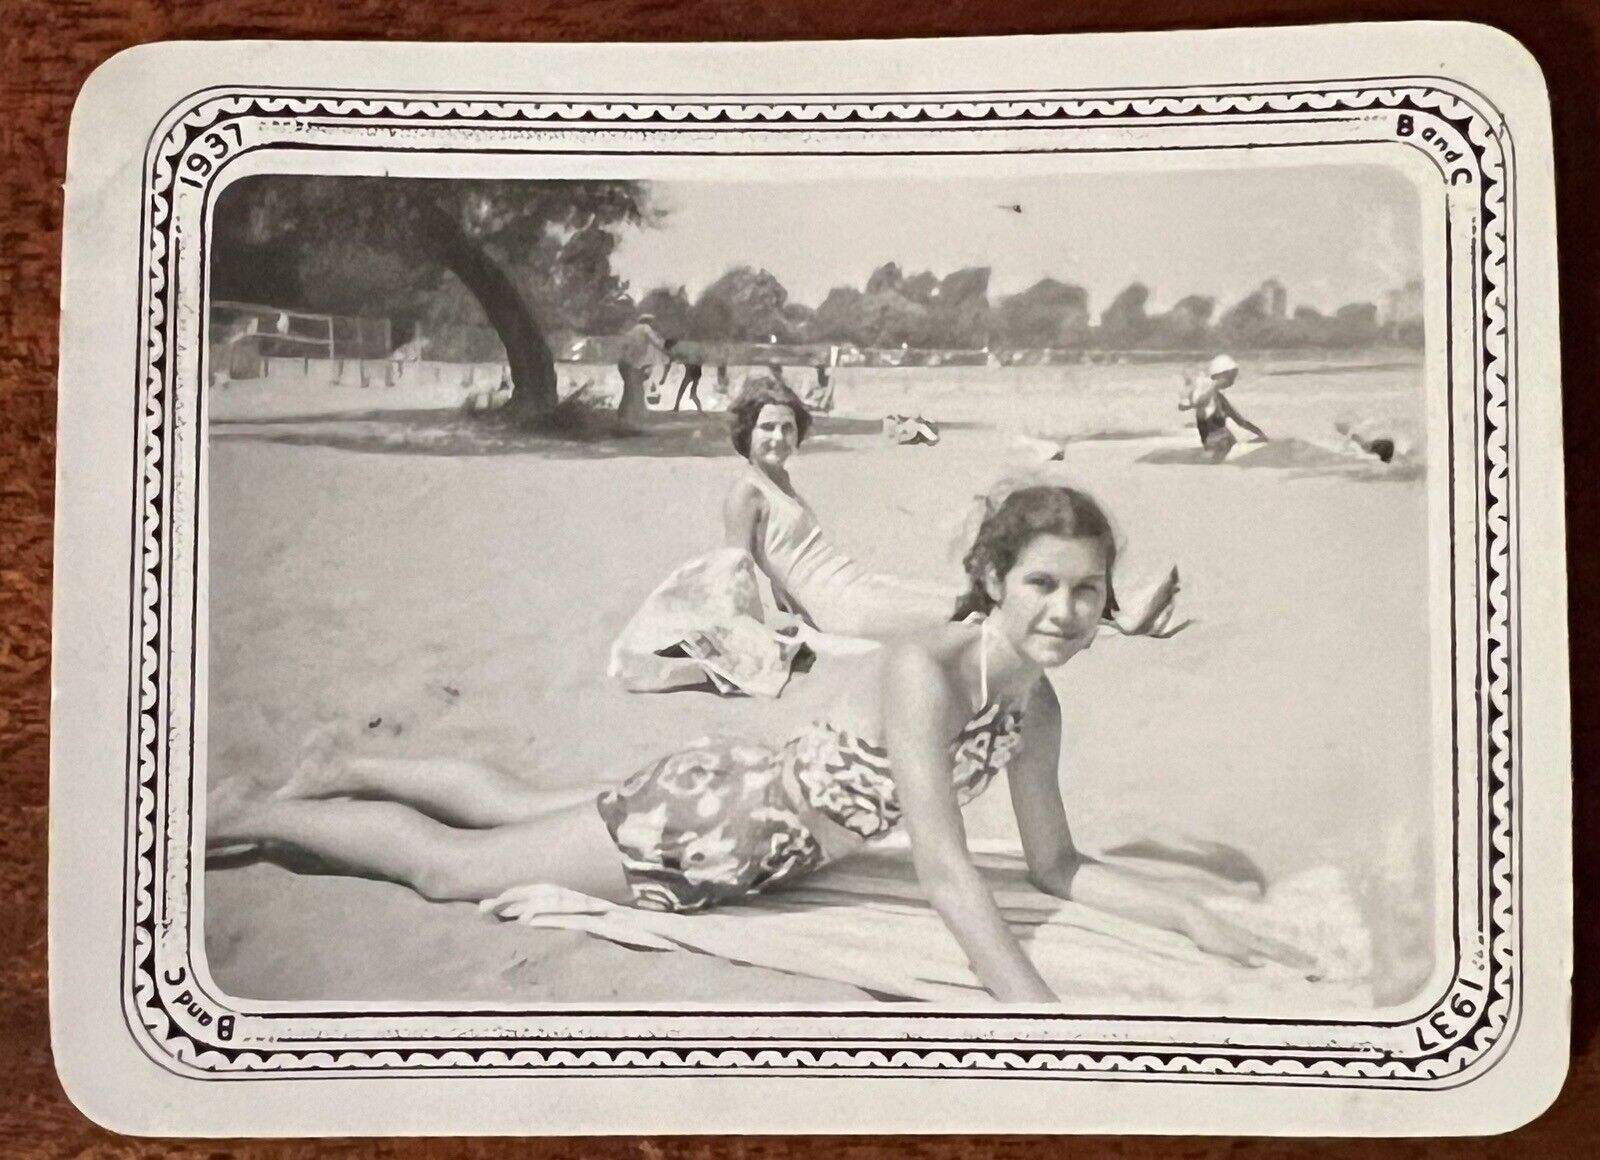 VTG 1937 Snapshot Photo Floral Print Swimsuit Sunbathing Beauty Beauties Beach